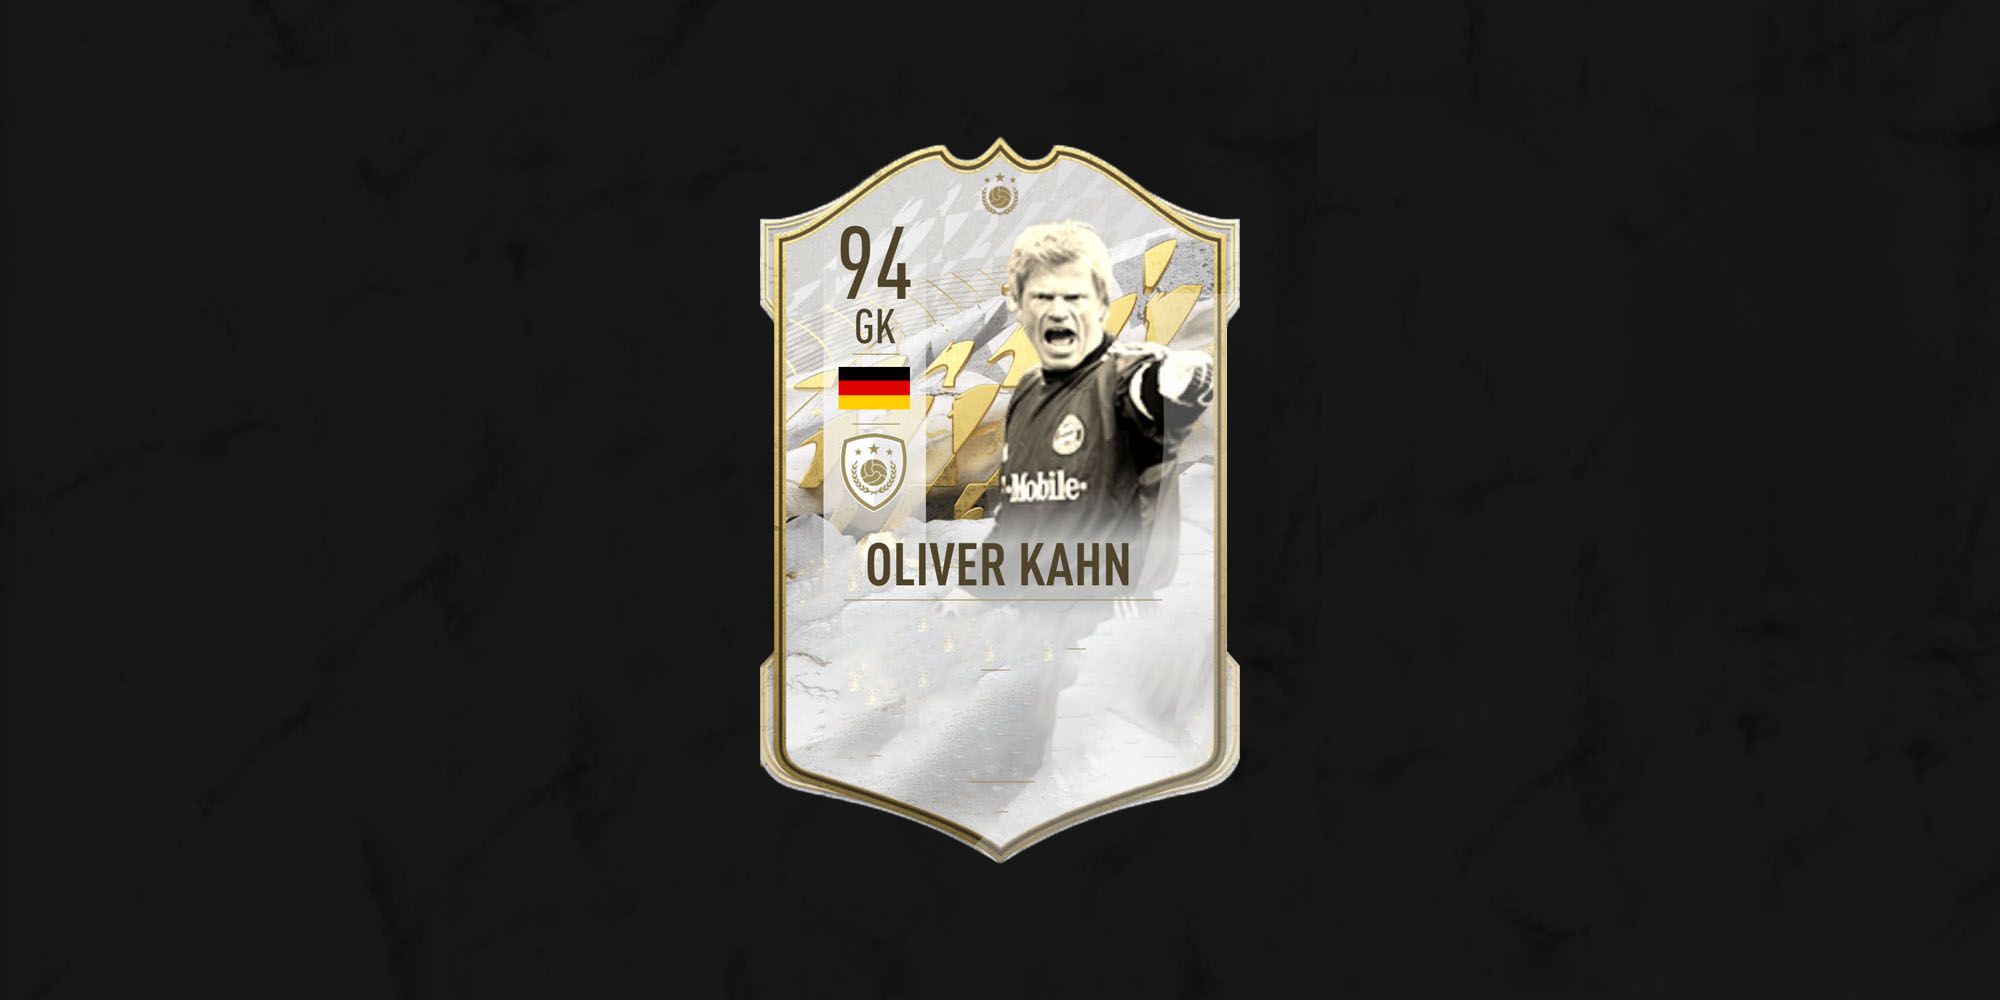 Oliver Kahn as a future FIFA Icon